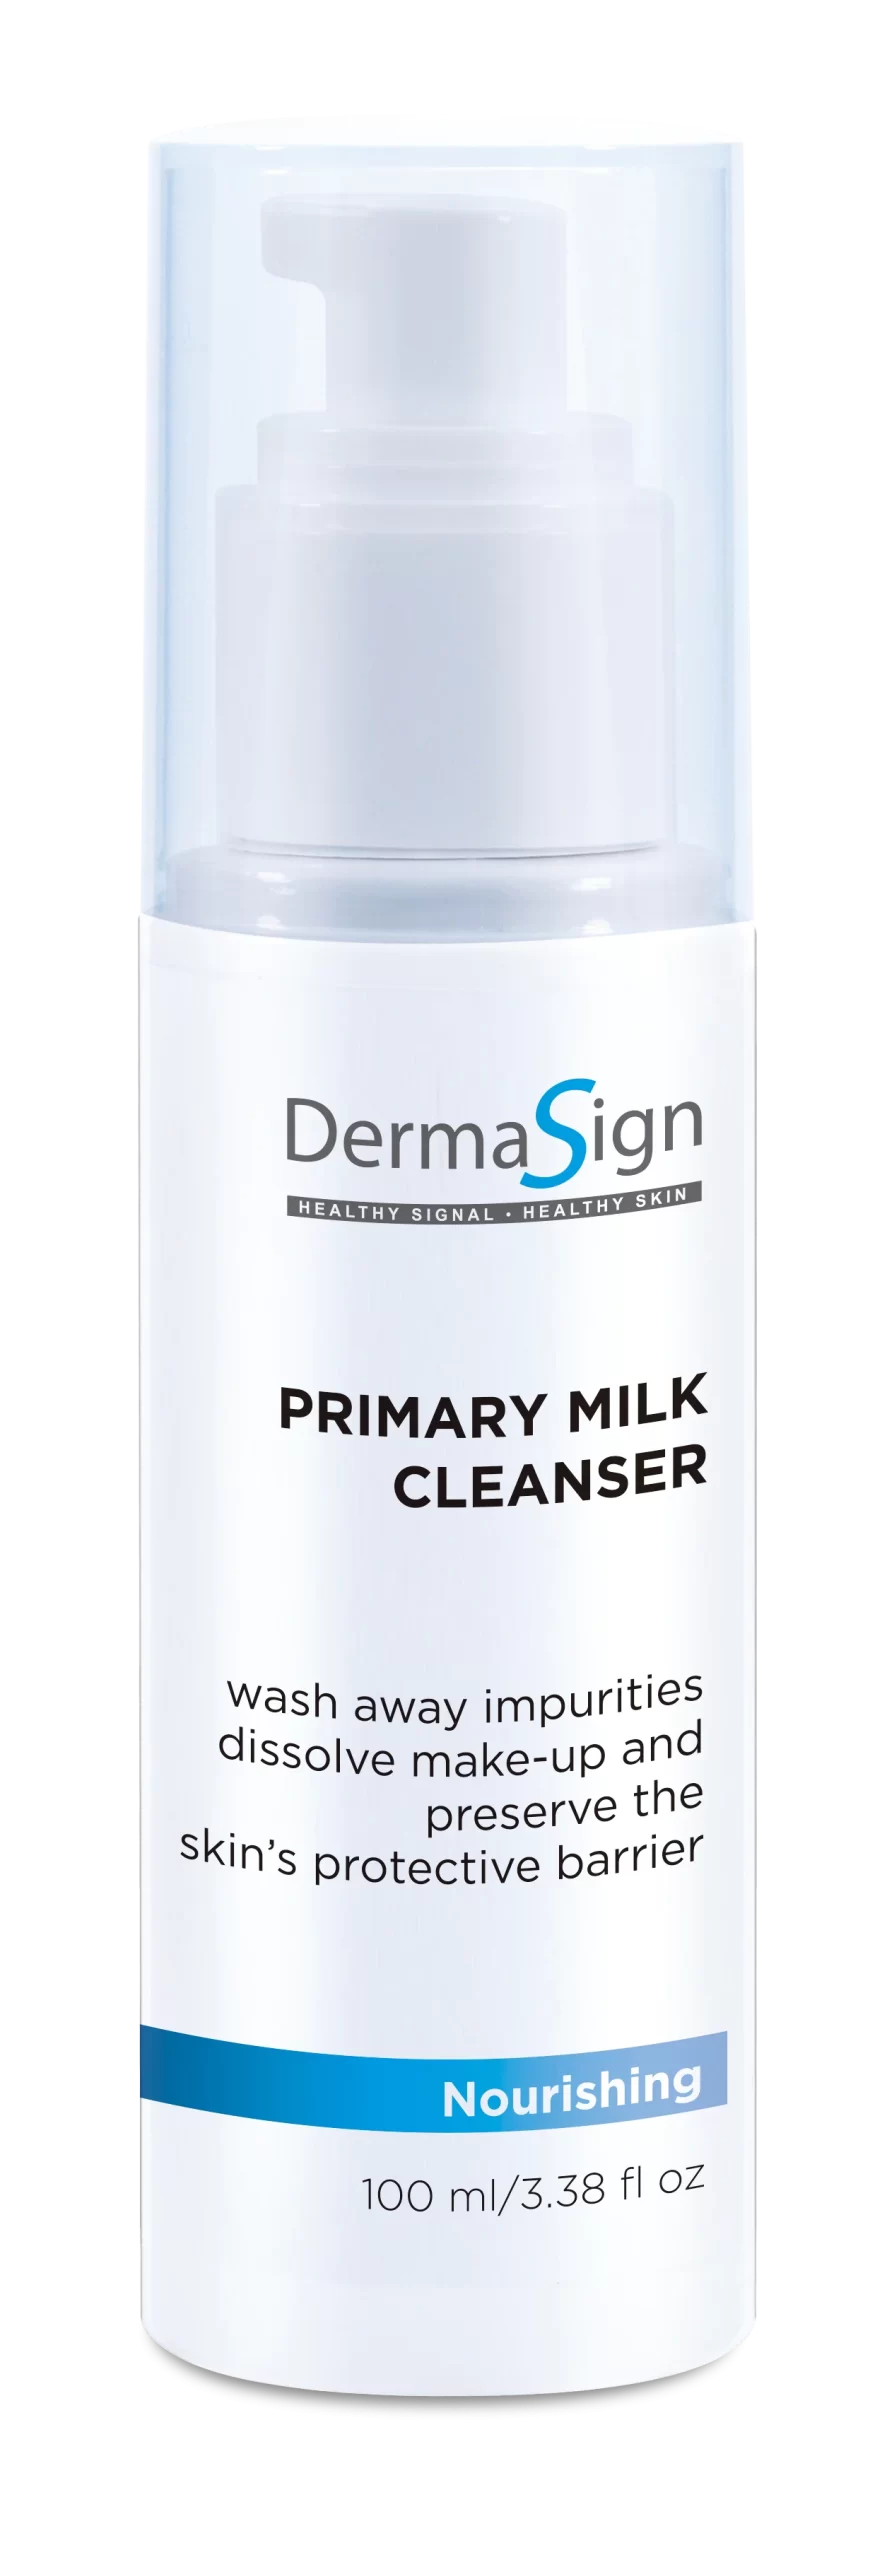 DermaSign 柔滑水潤潔面乳 Primary Milk Cleaner